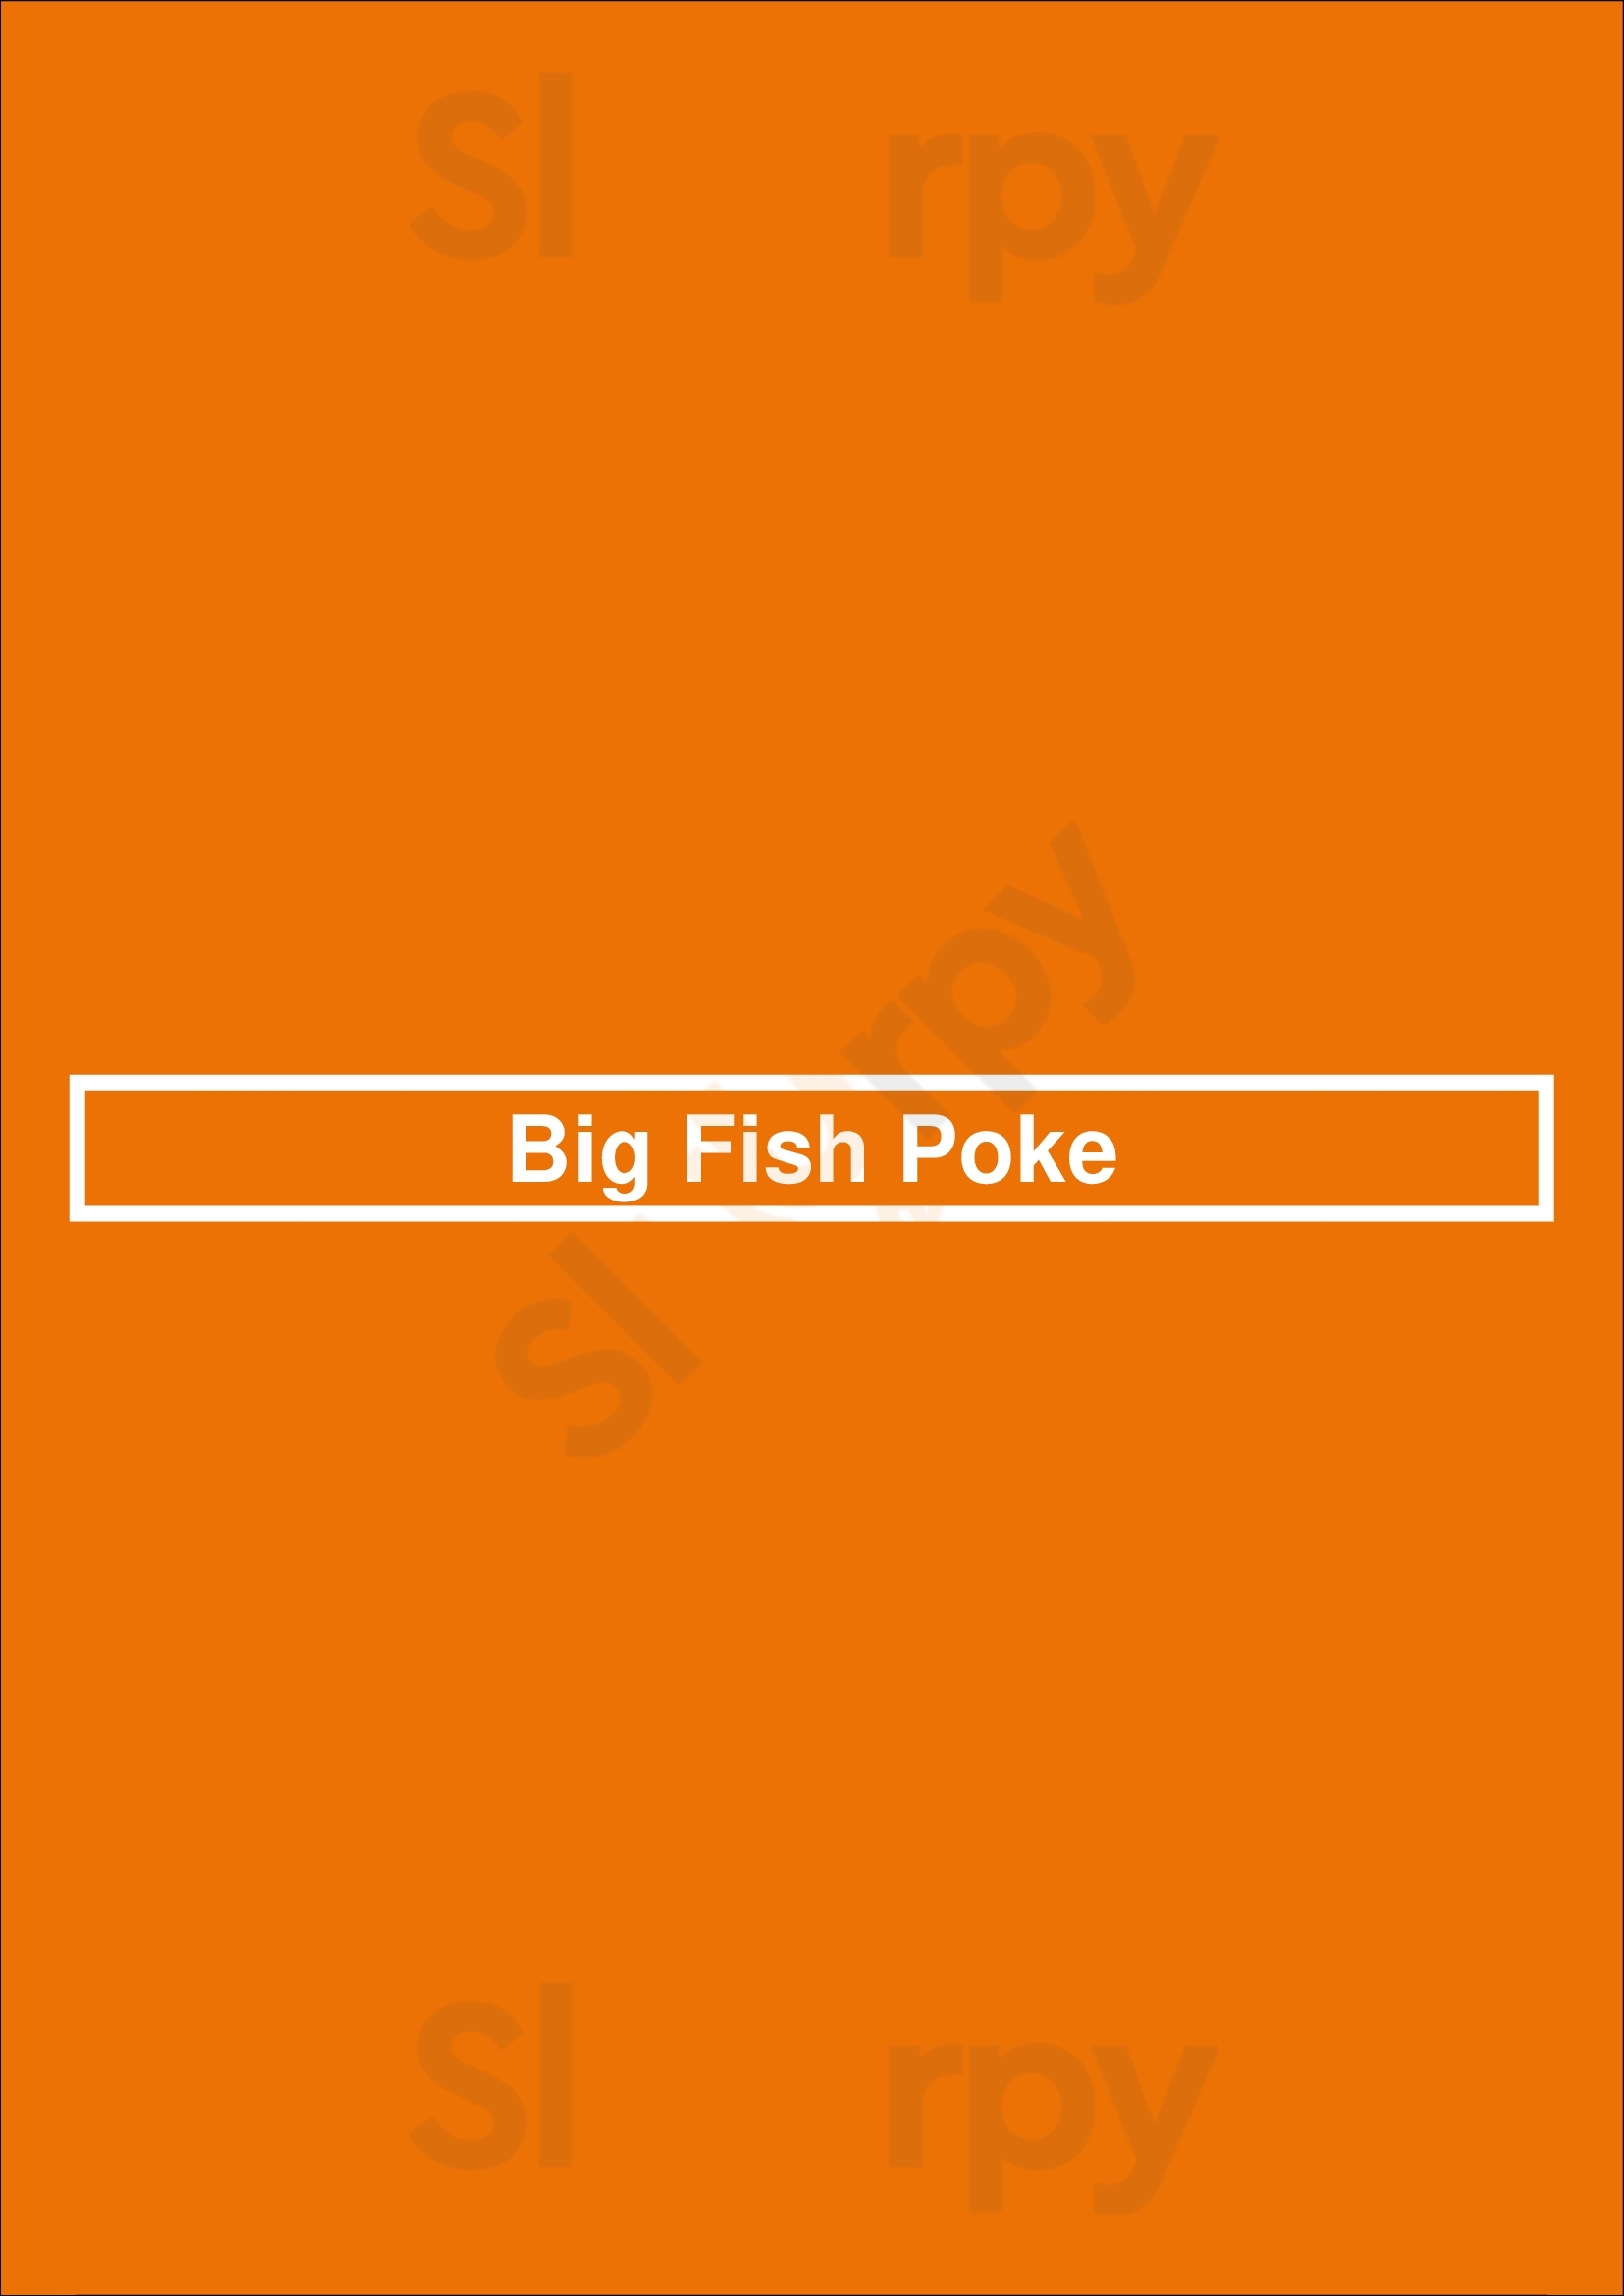 Big Fish Poke Lisboa Menu - 1